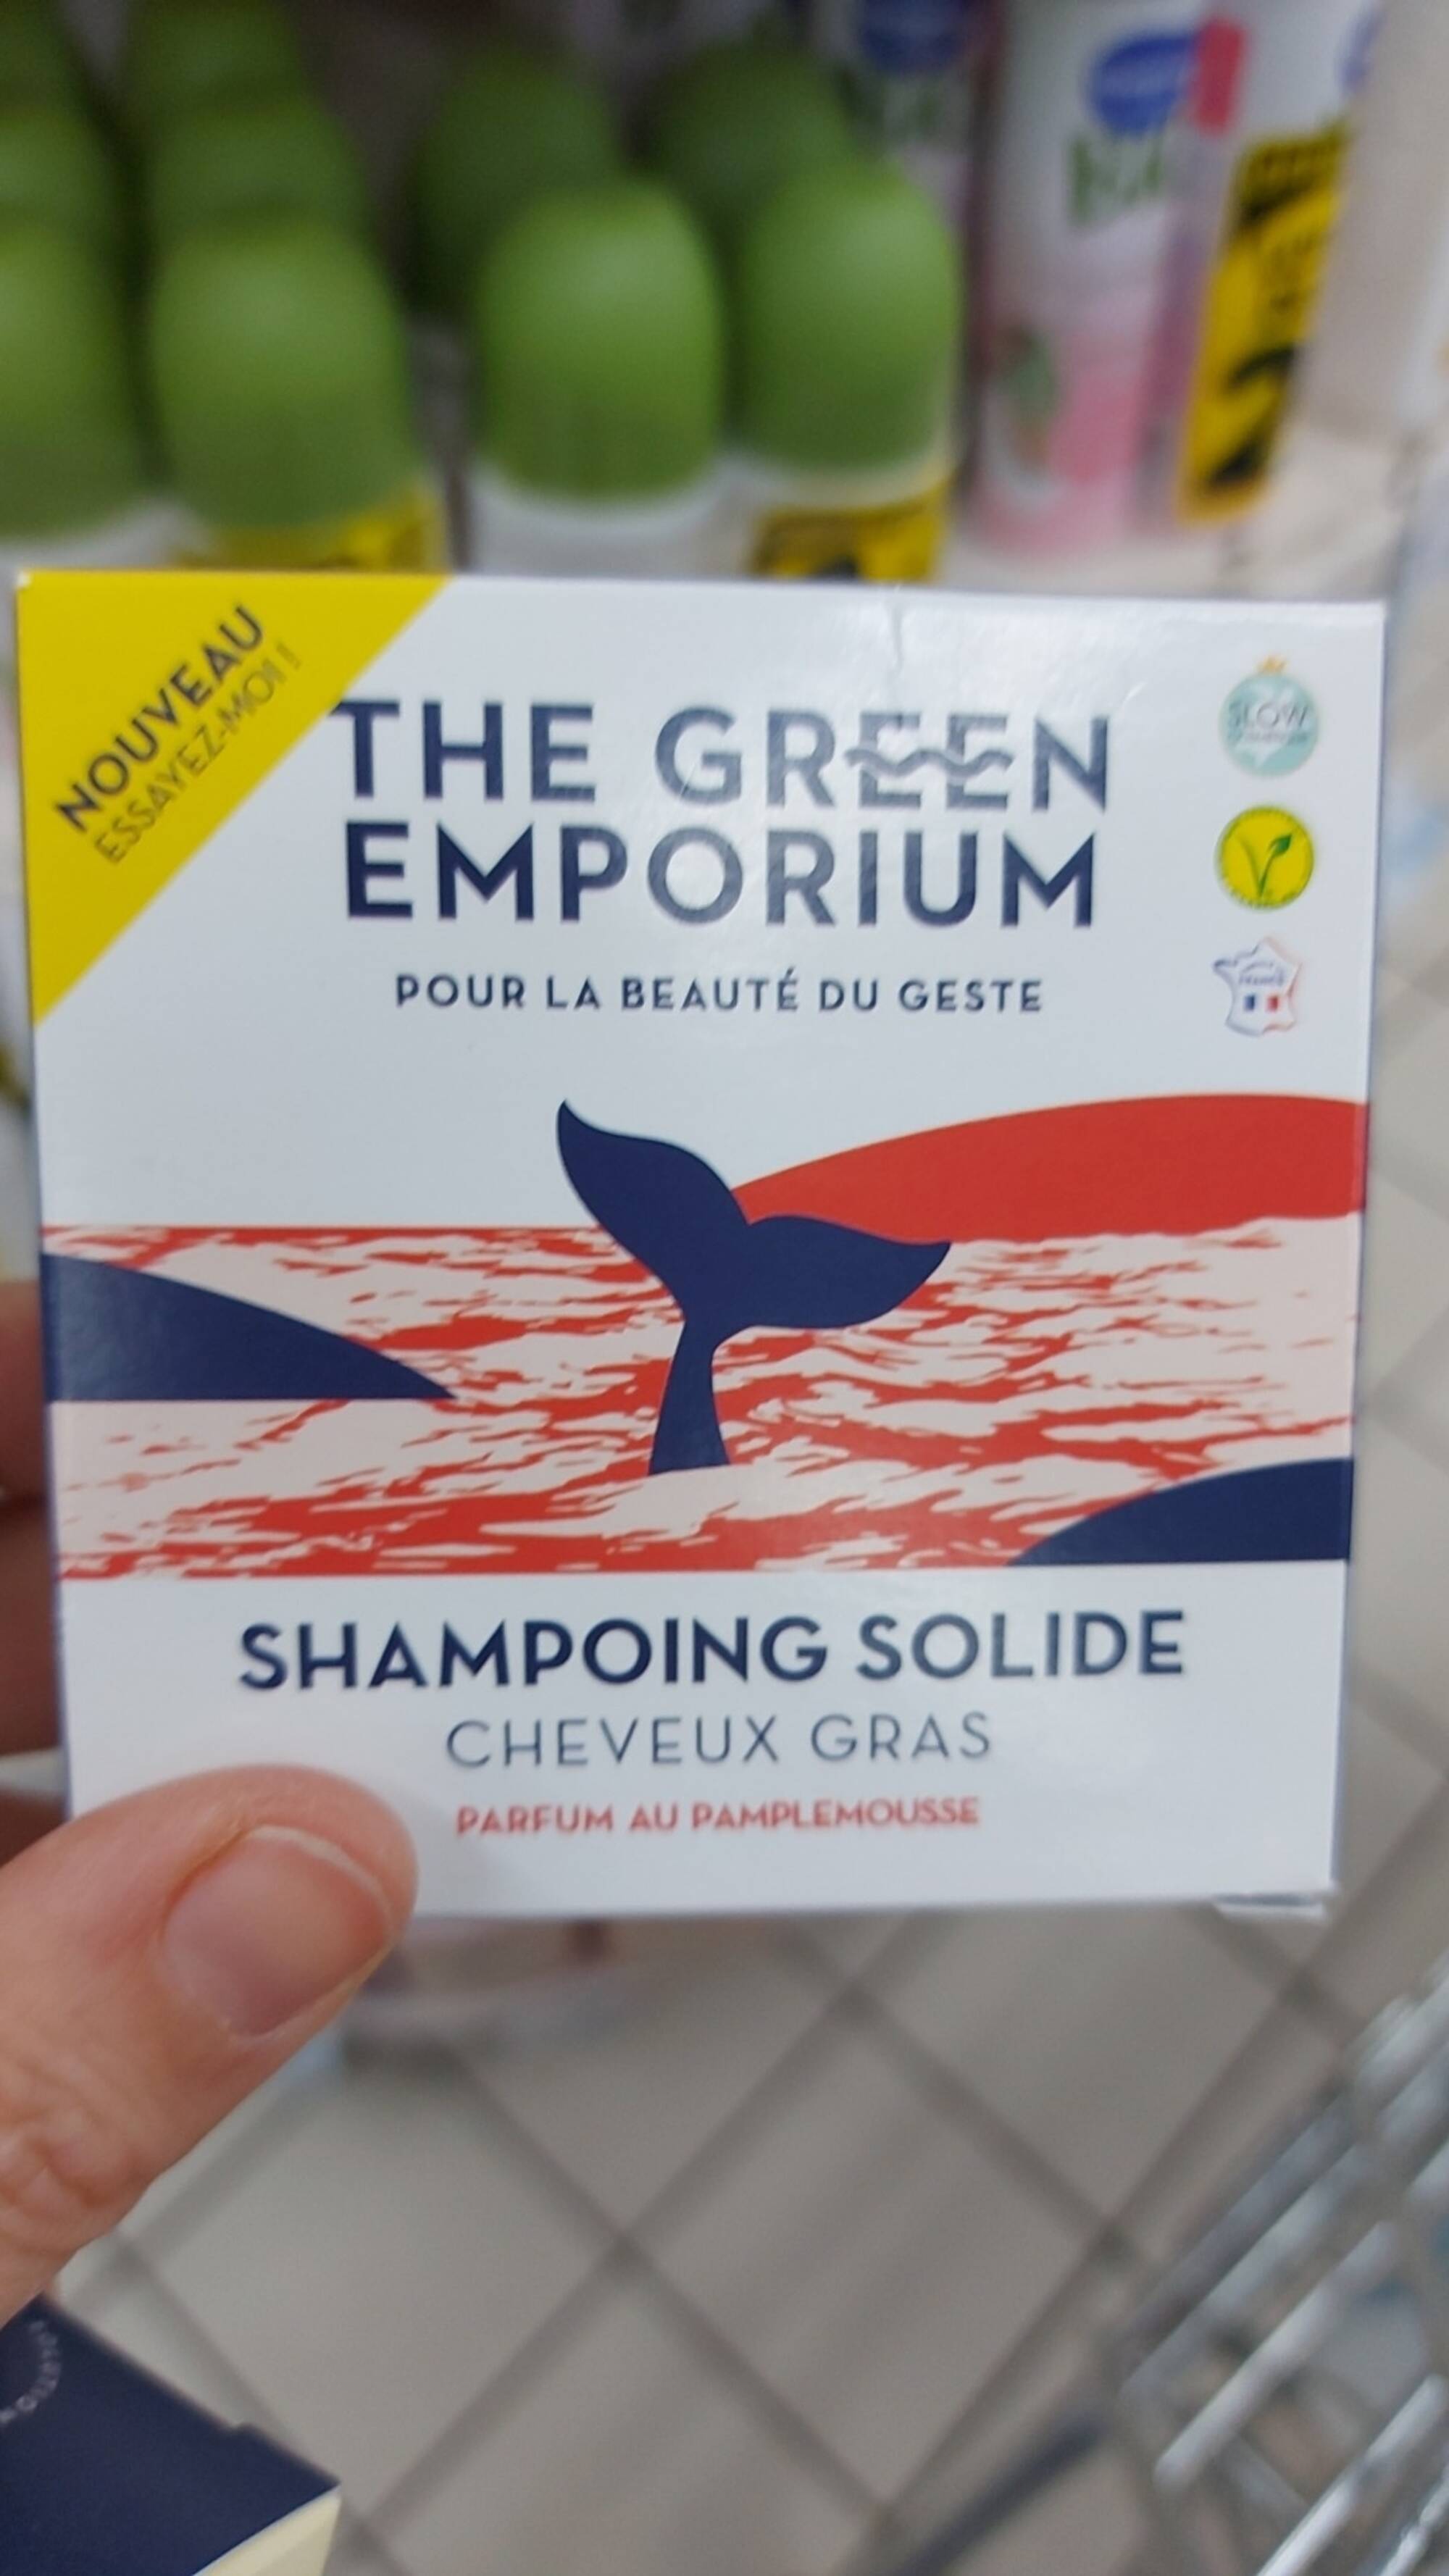 THE GREEN EMPORIUM - Shampooing solide pour cheveux gras